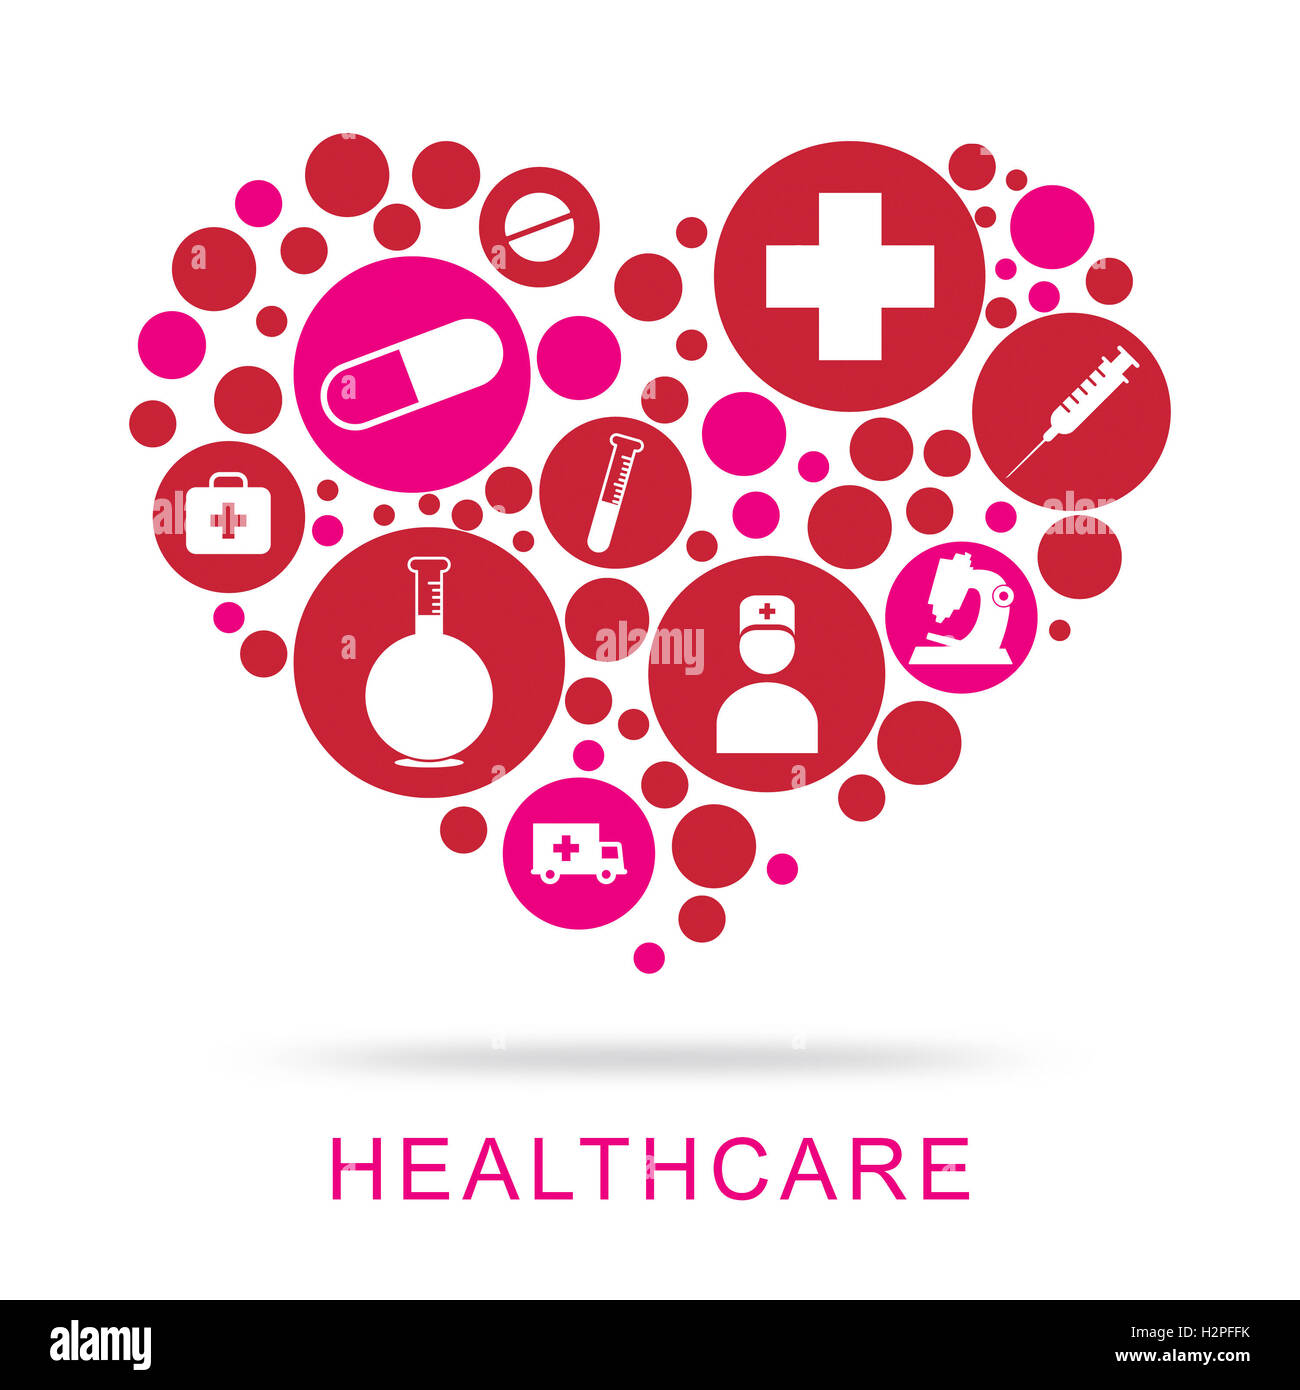 Healthcare Icons Representing Preventive Medicine And Well Stock Photo